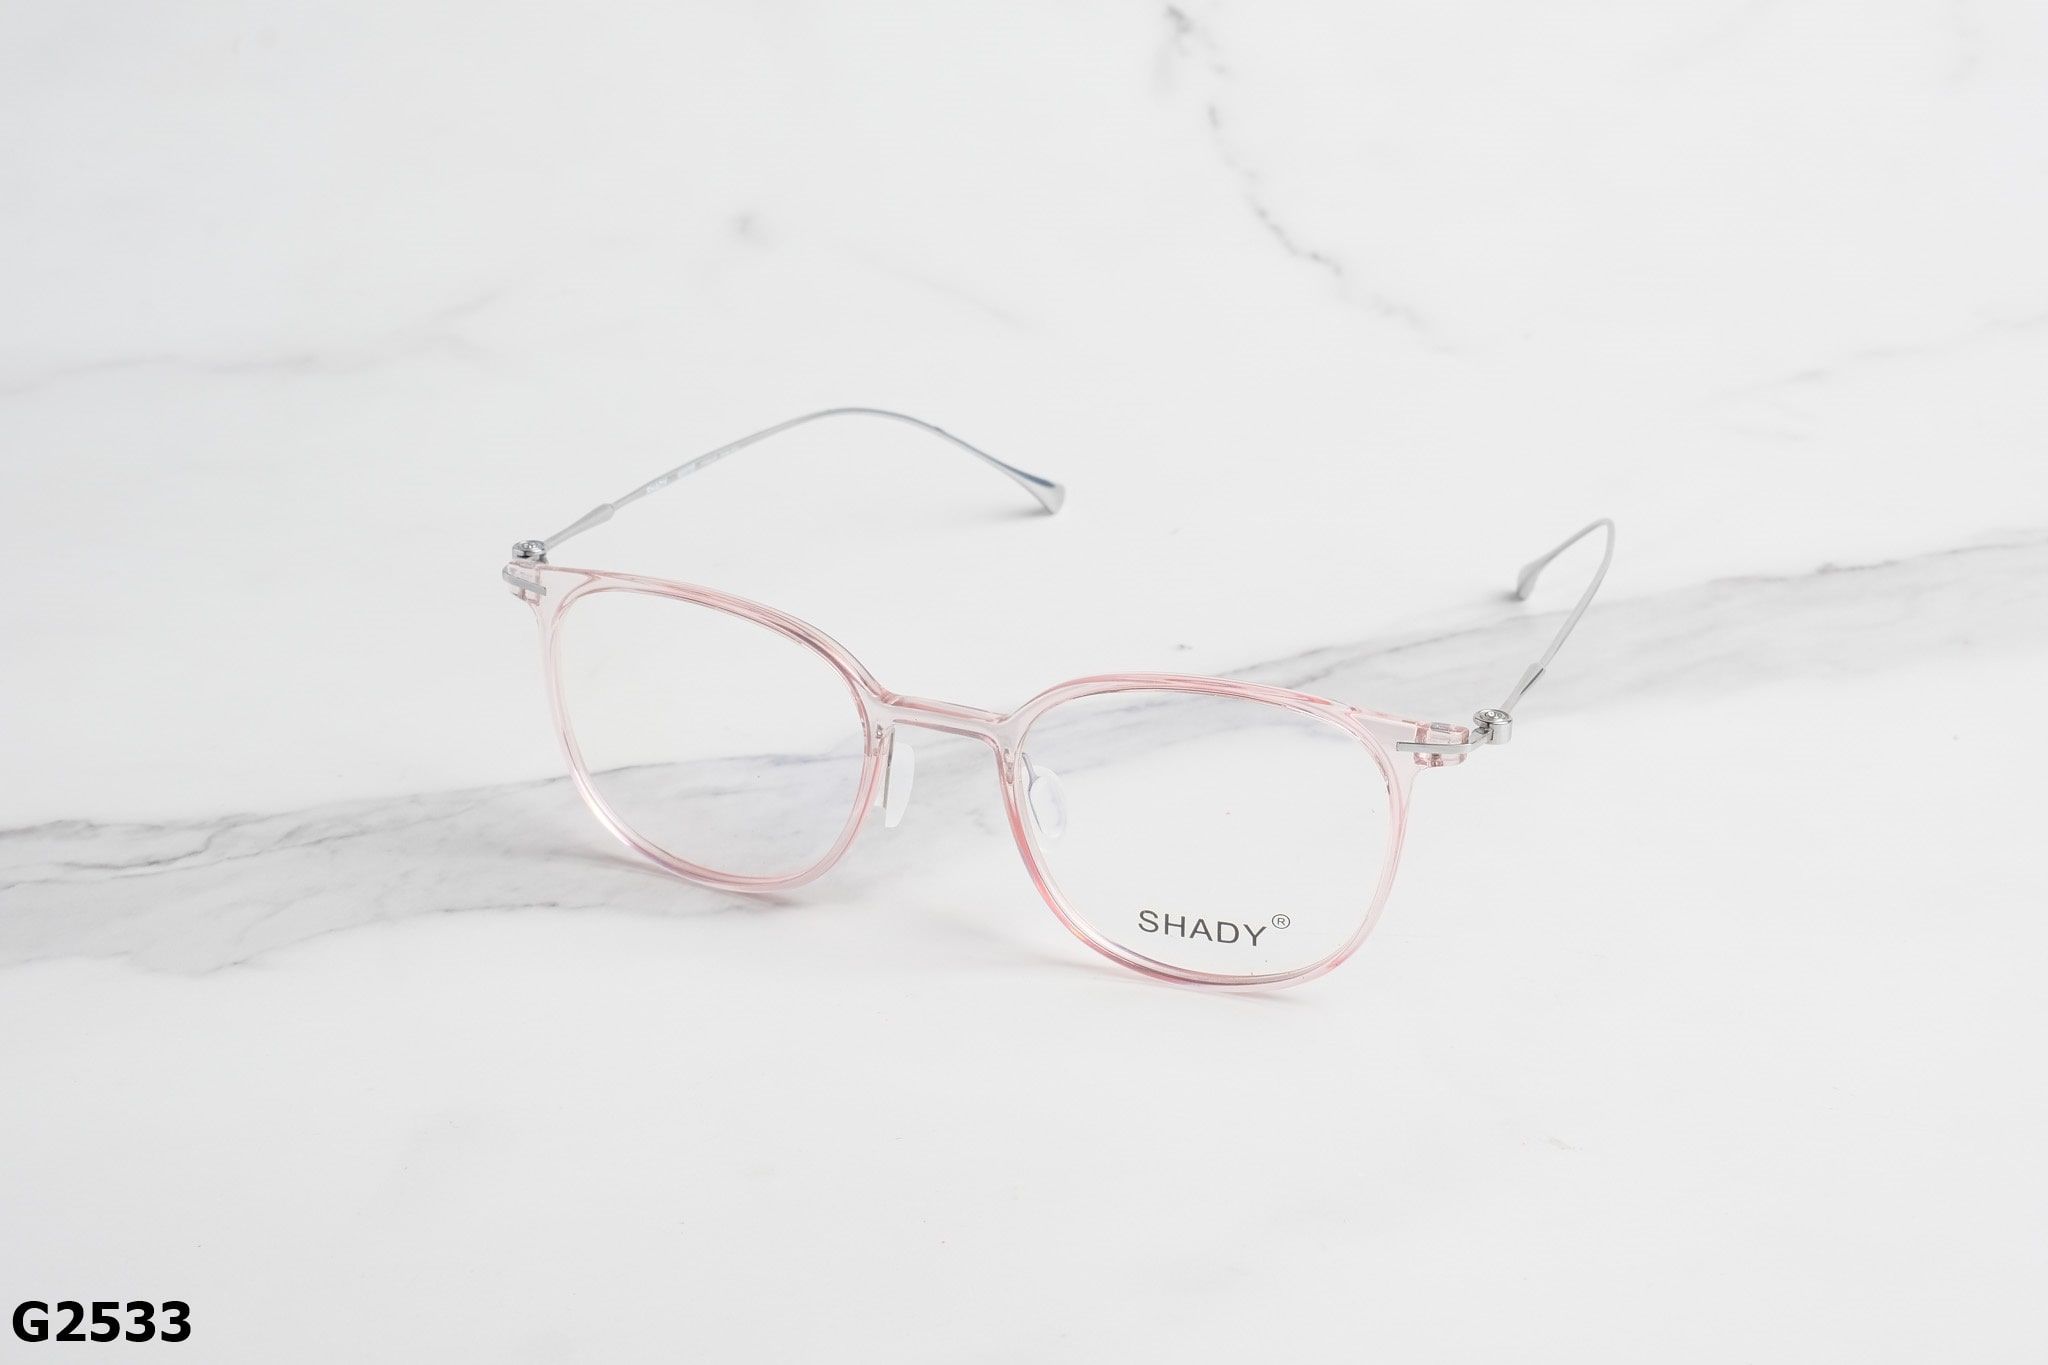  SHADY Eyewear - Glasses - G2533 